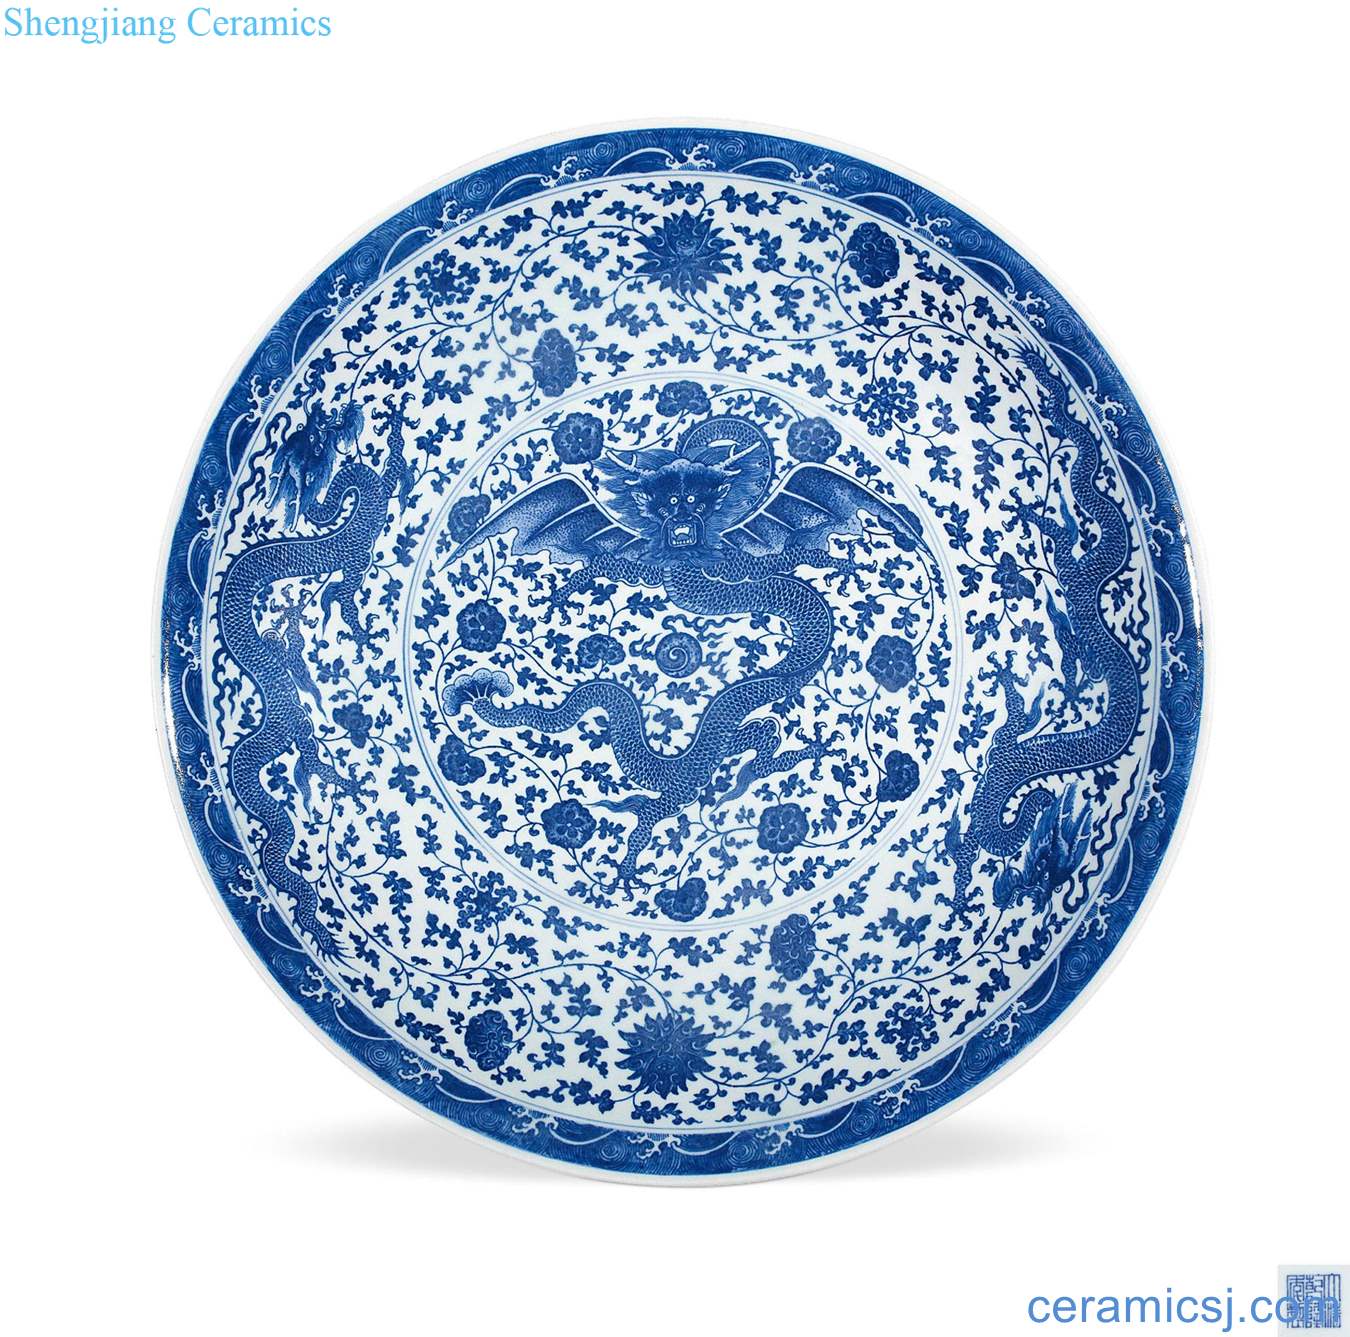 Qing qianlong Blue and white should wear pattern plate dragon